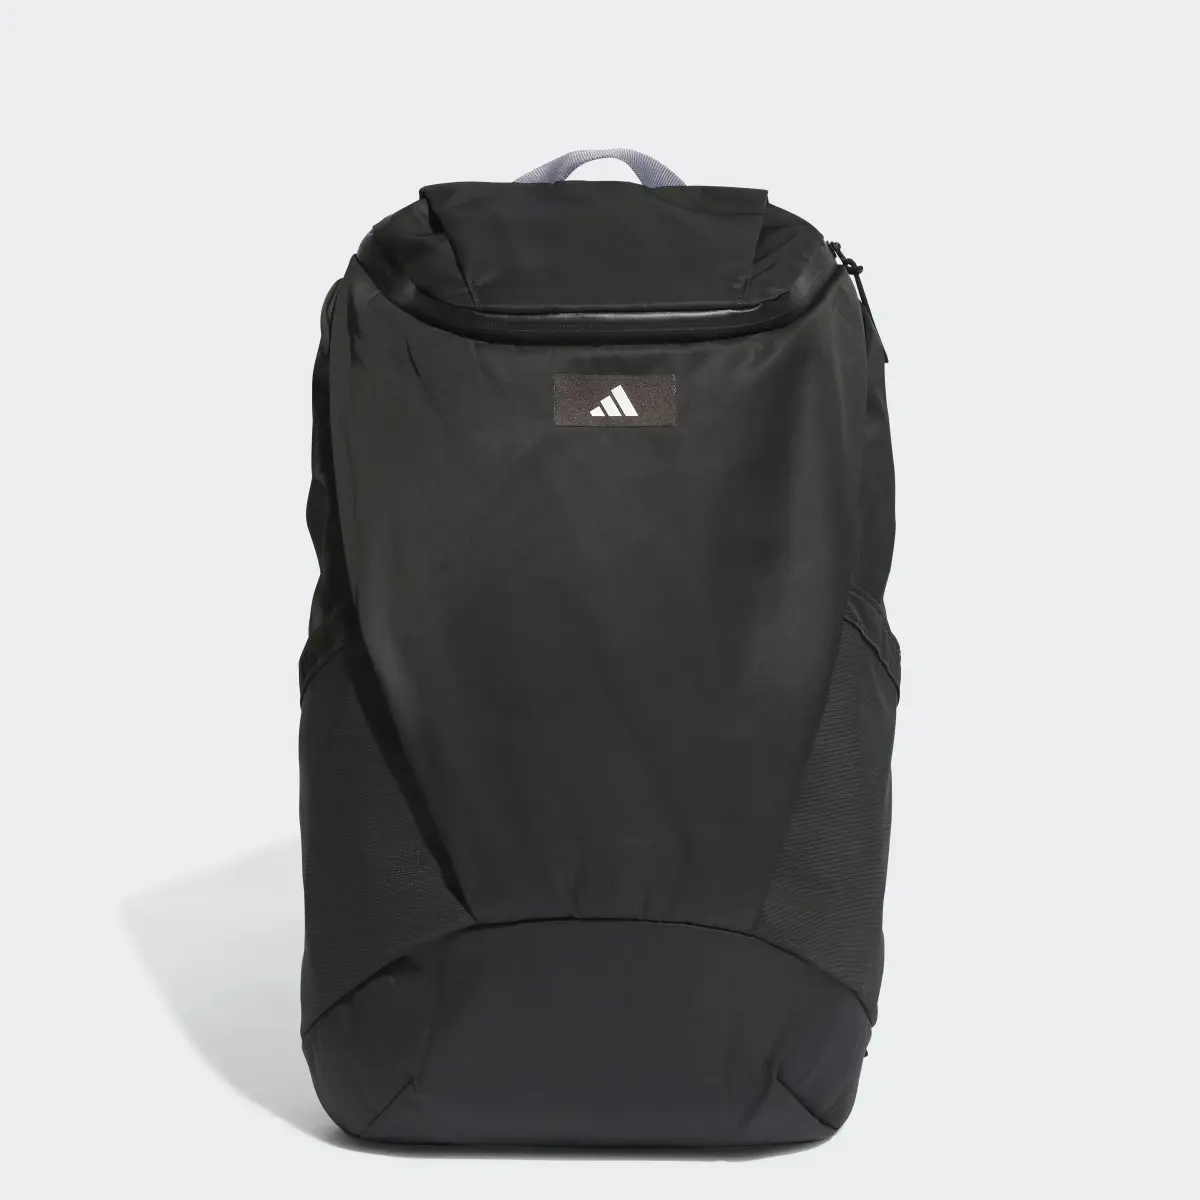 Adidas Designed for Training Gym Backpack. 1